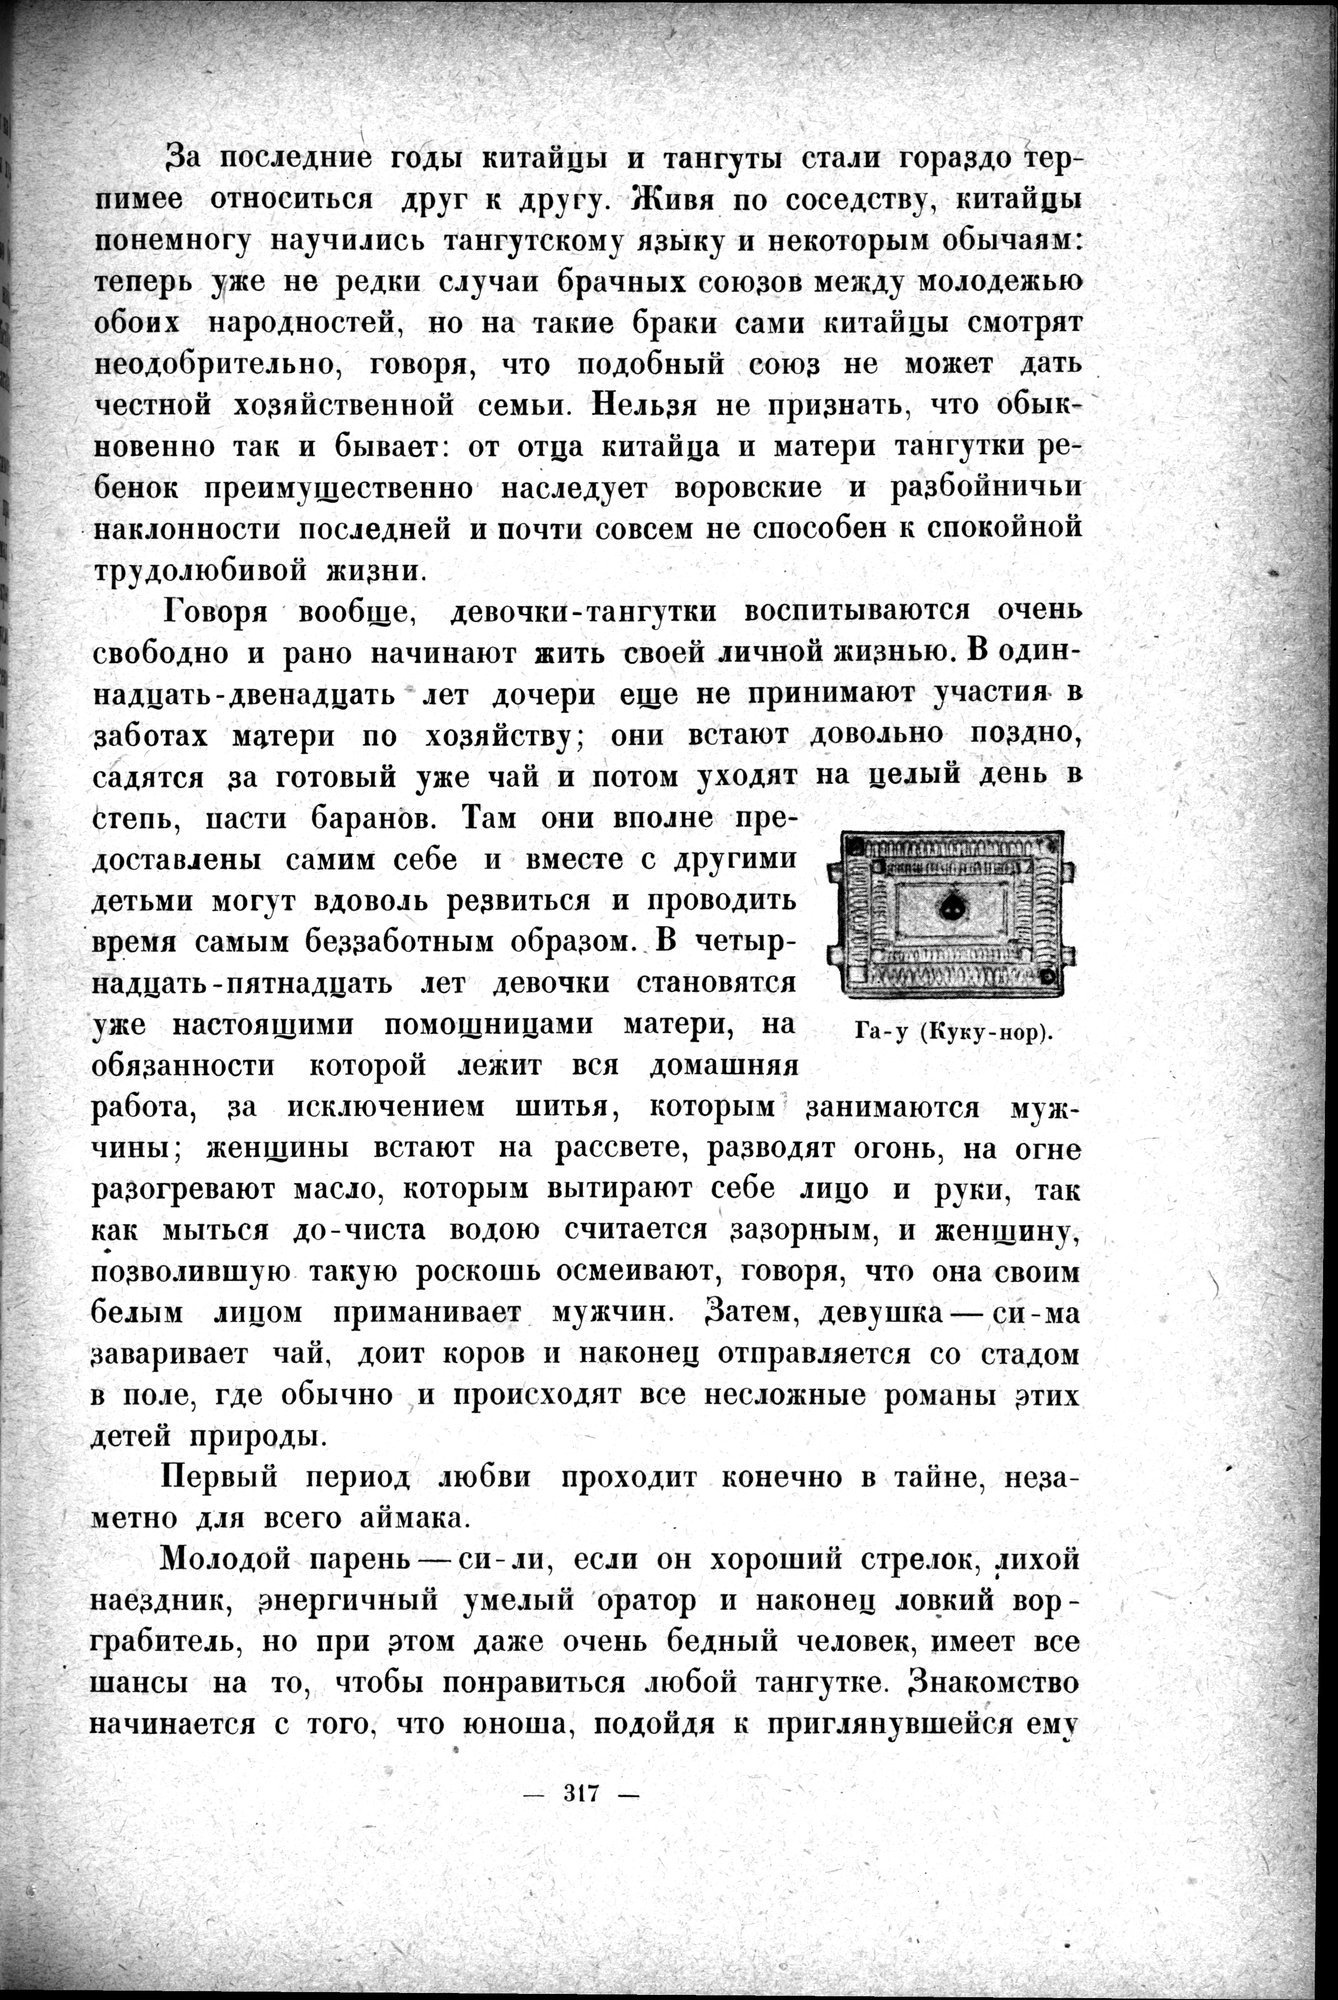 Mongoliya i Amdo i mertby gorod Khara-Khoto : vol.1 / Page 367 (Grayscale High Resolution Image)